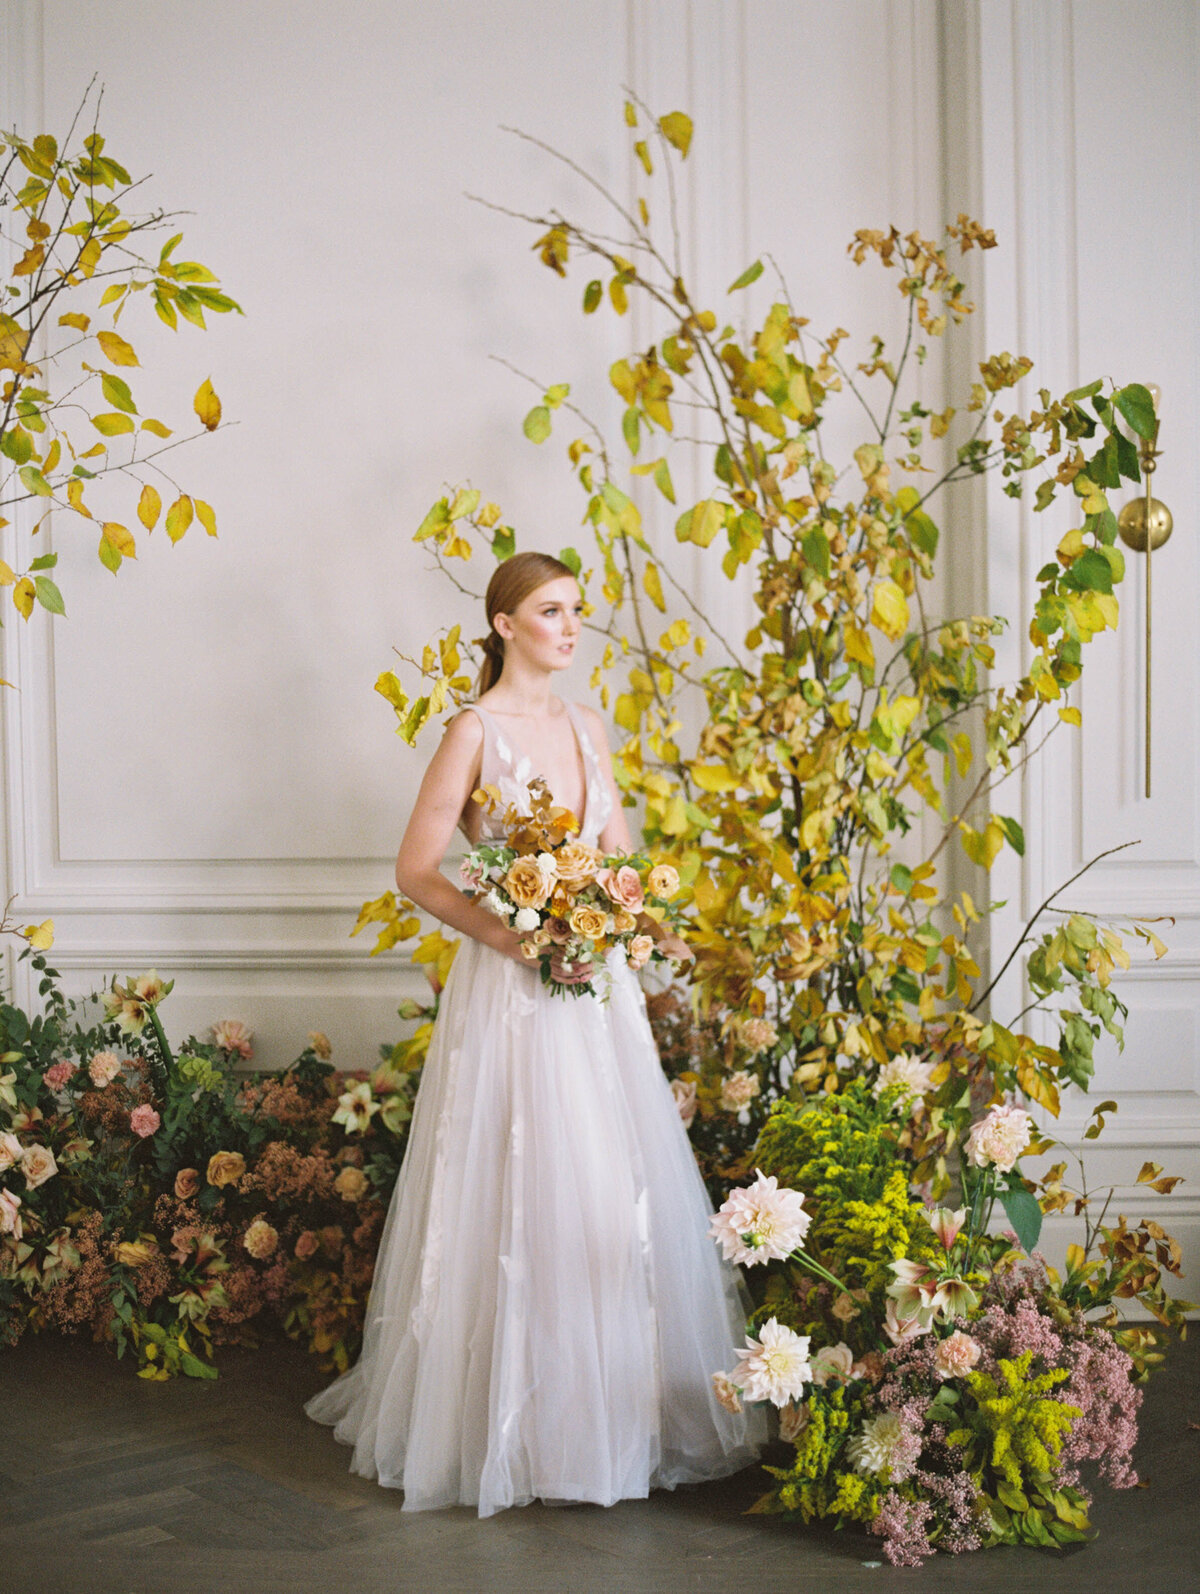 max-owens-design-yellow-wedding-flowers-03-bride-bouquet